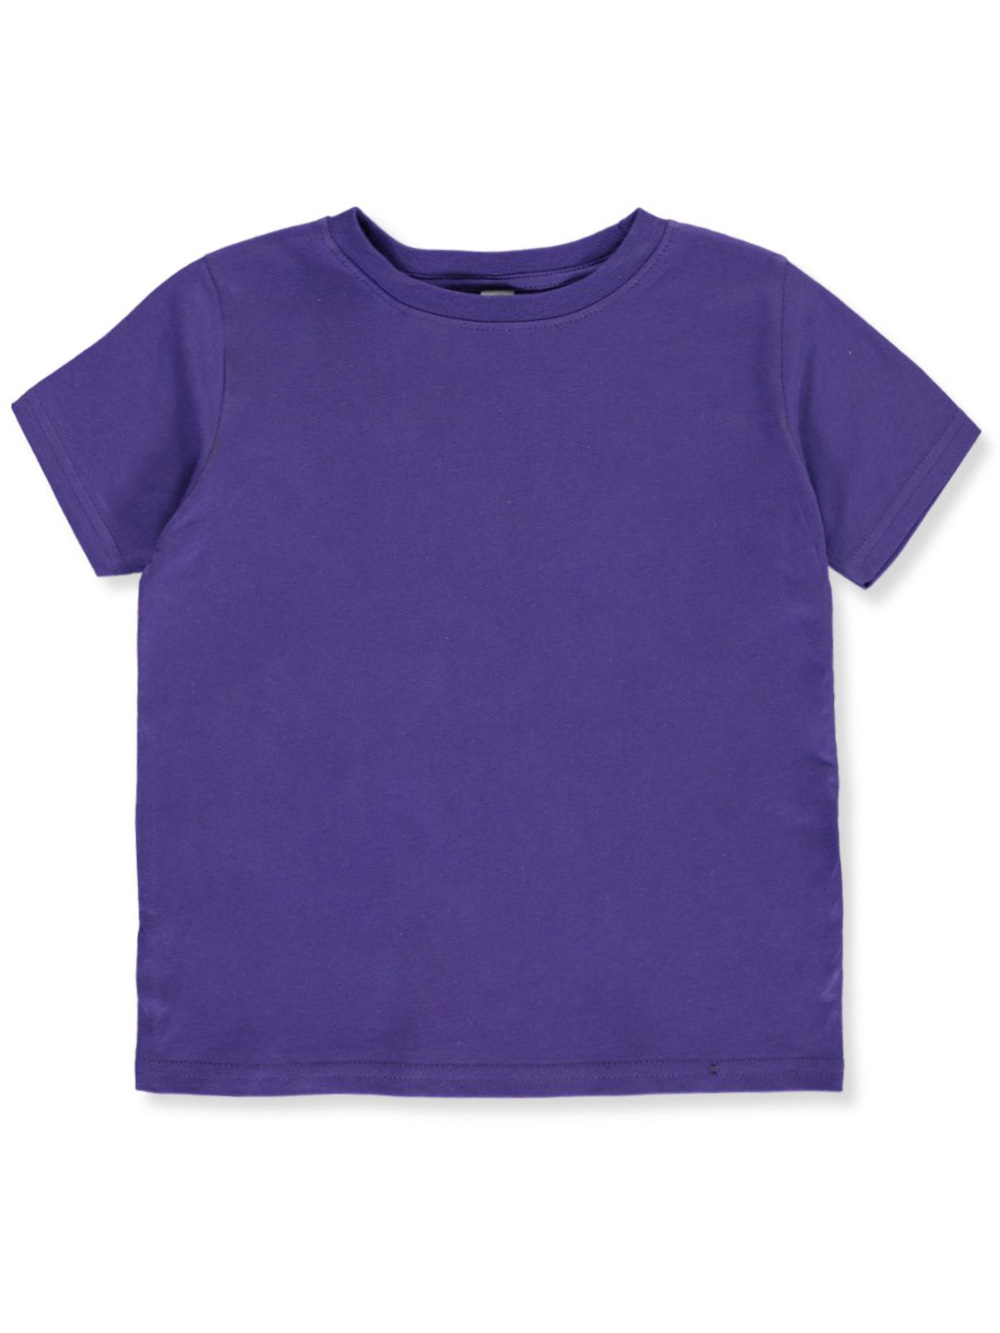 Boys Purple T-Shirts